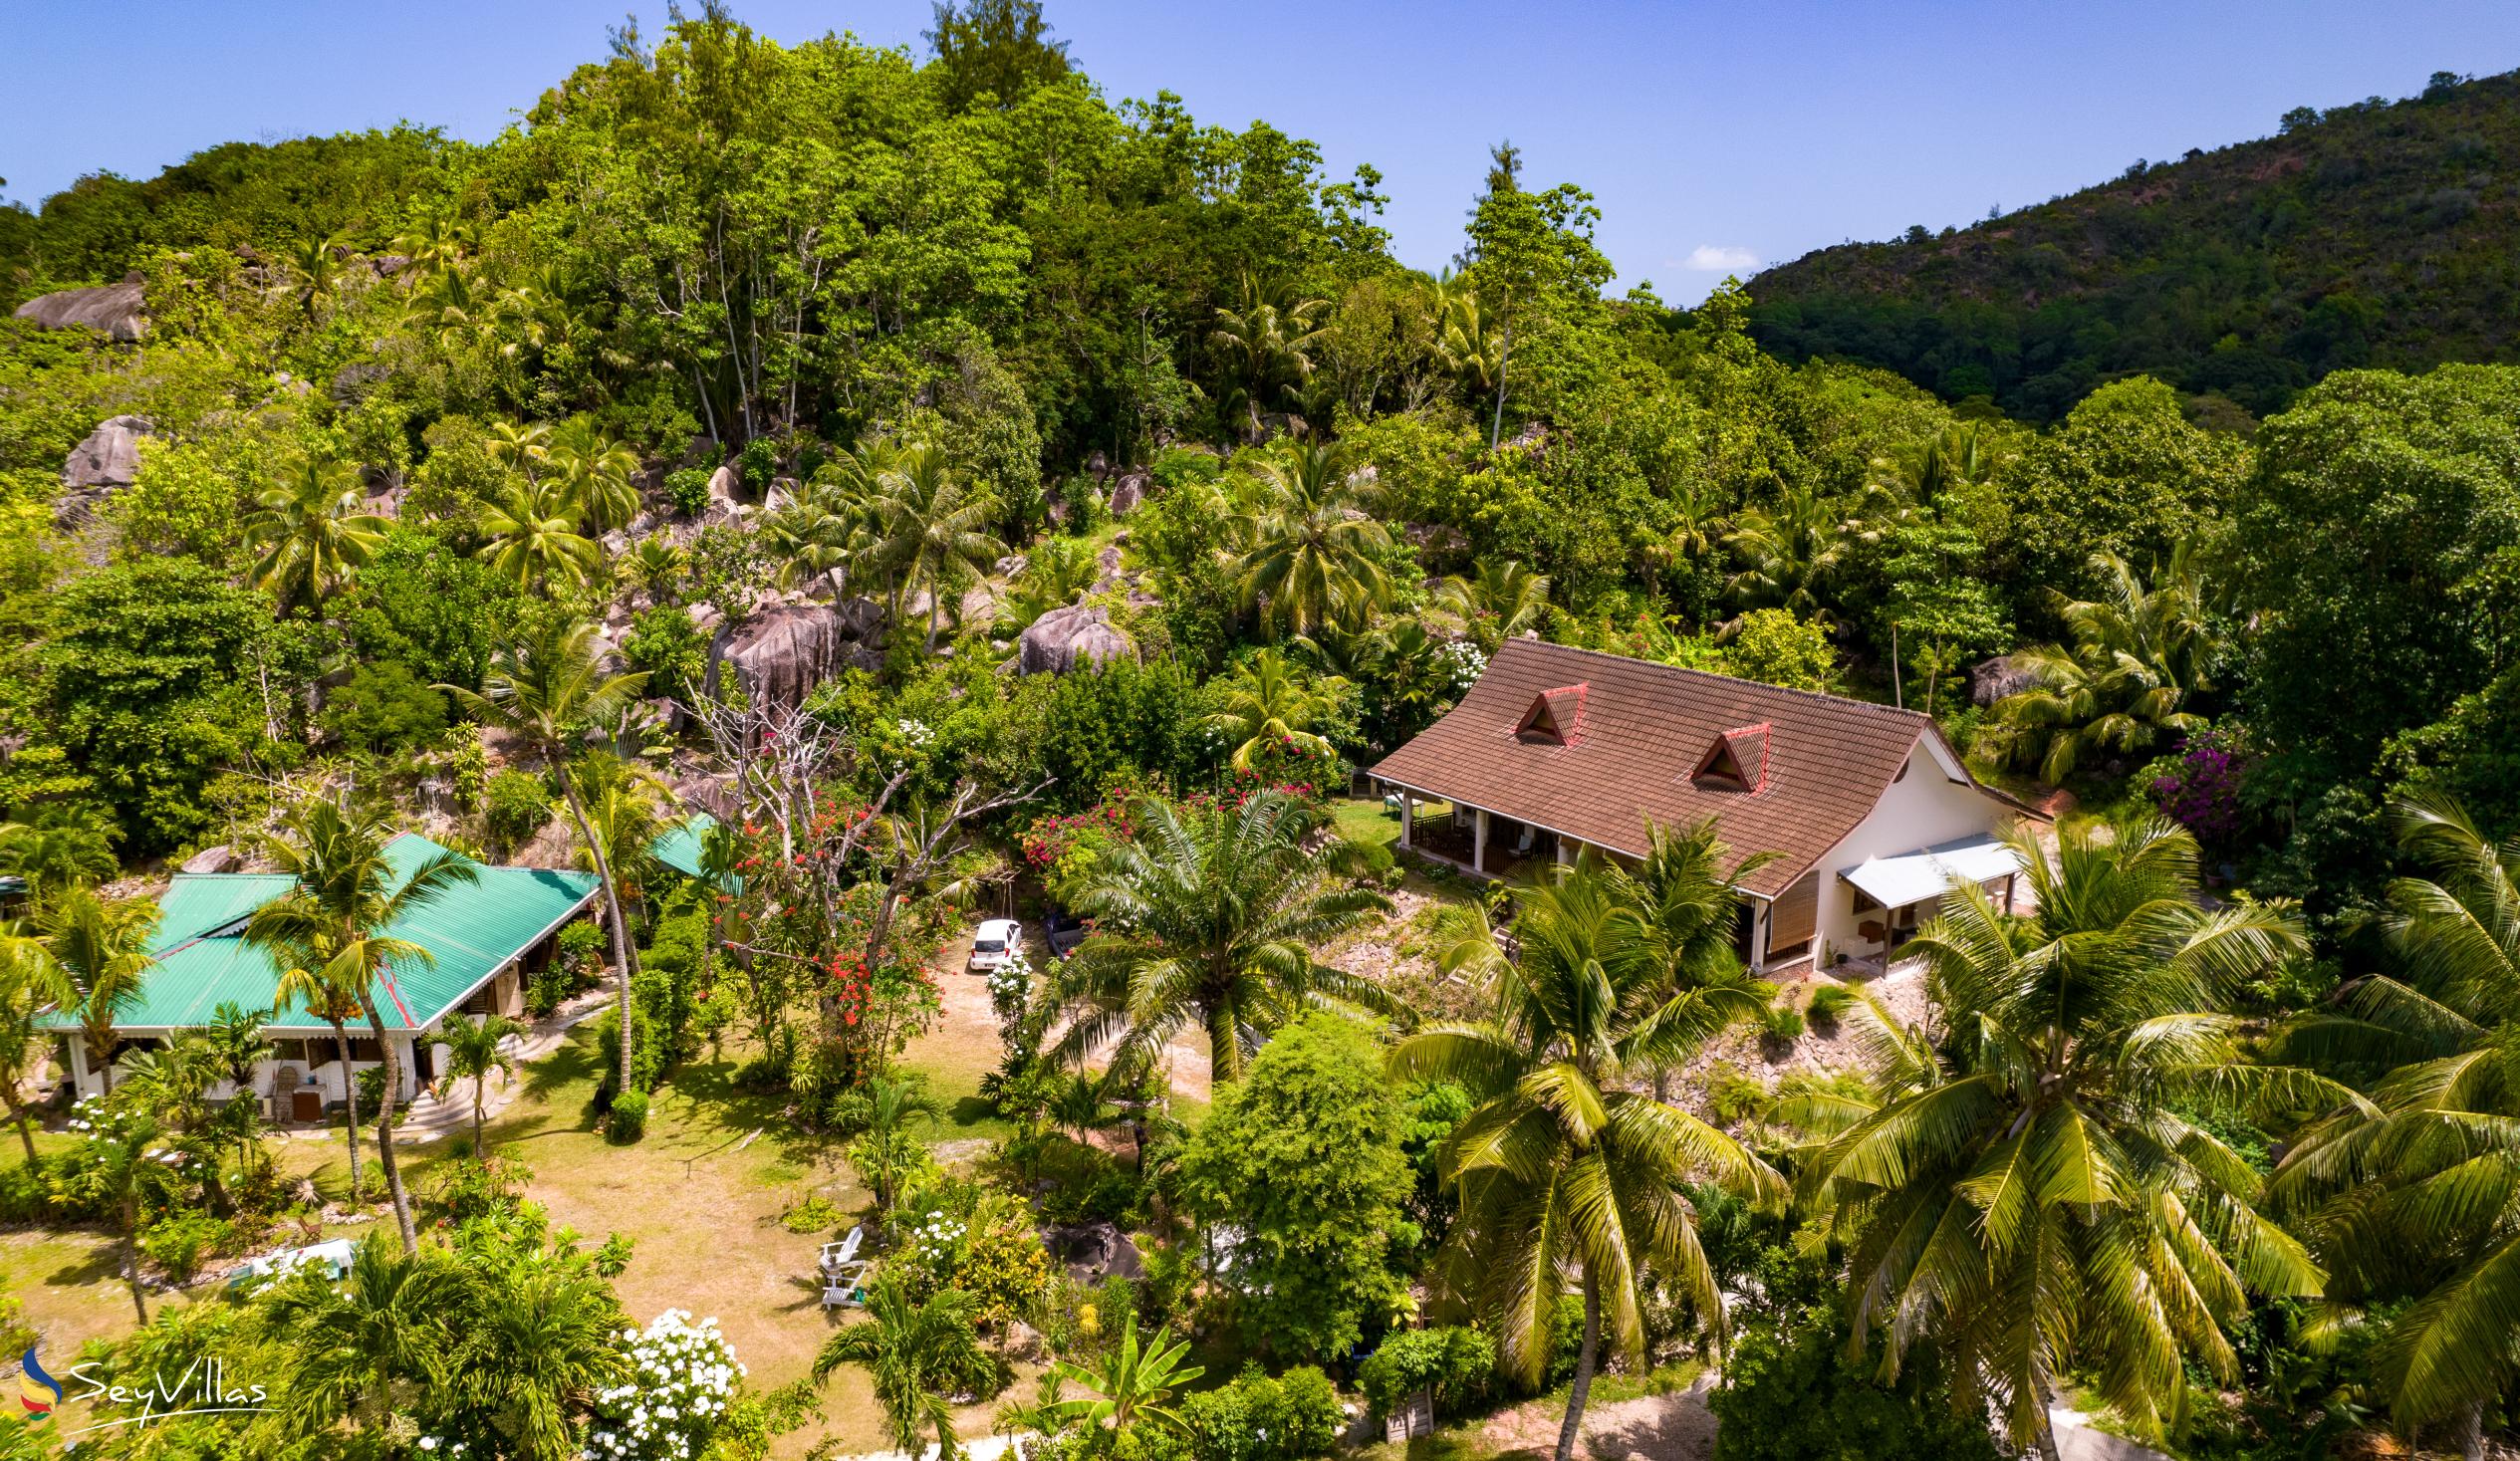 Photo 4: Villas du Voyageur - Outdoor area - Praslin (Seychelles)